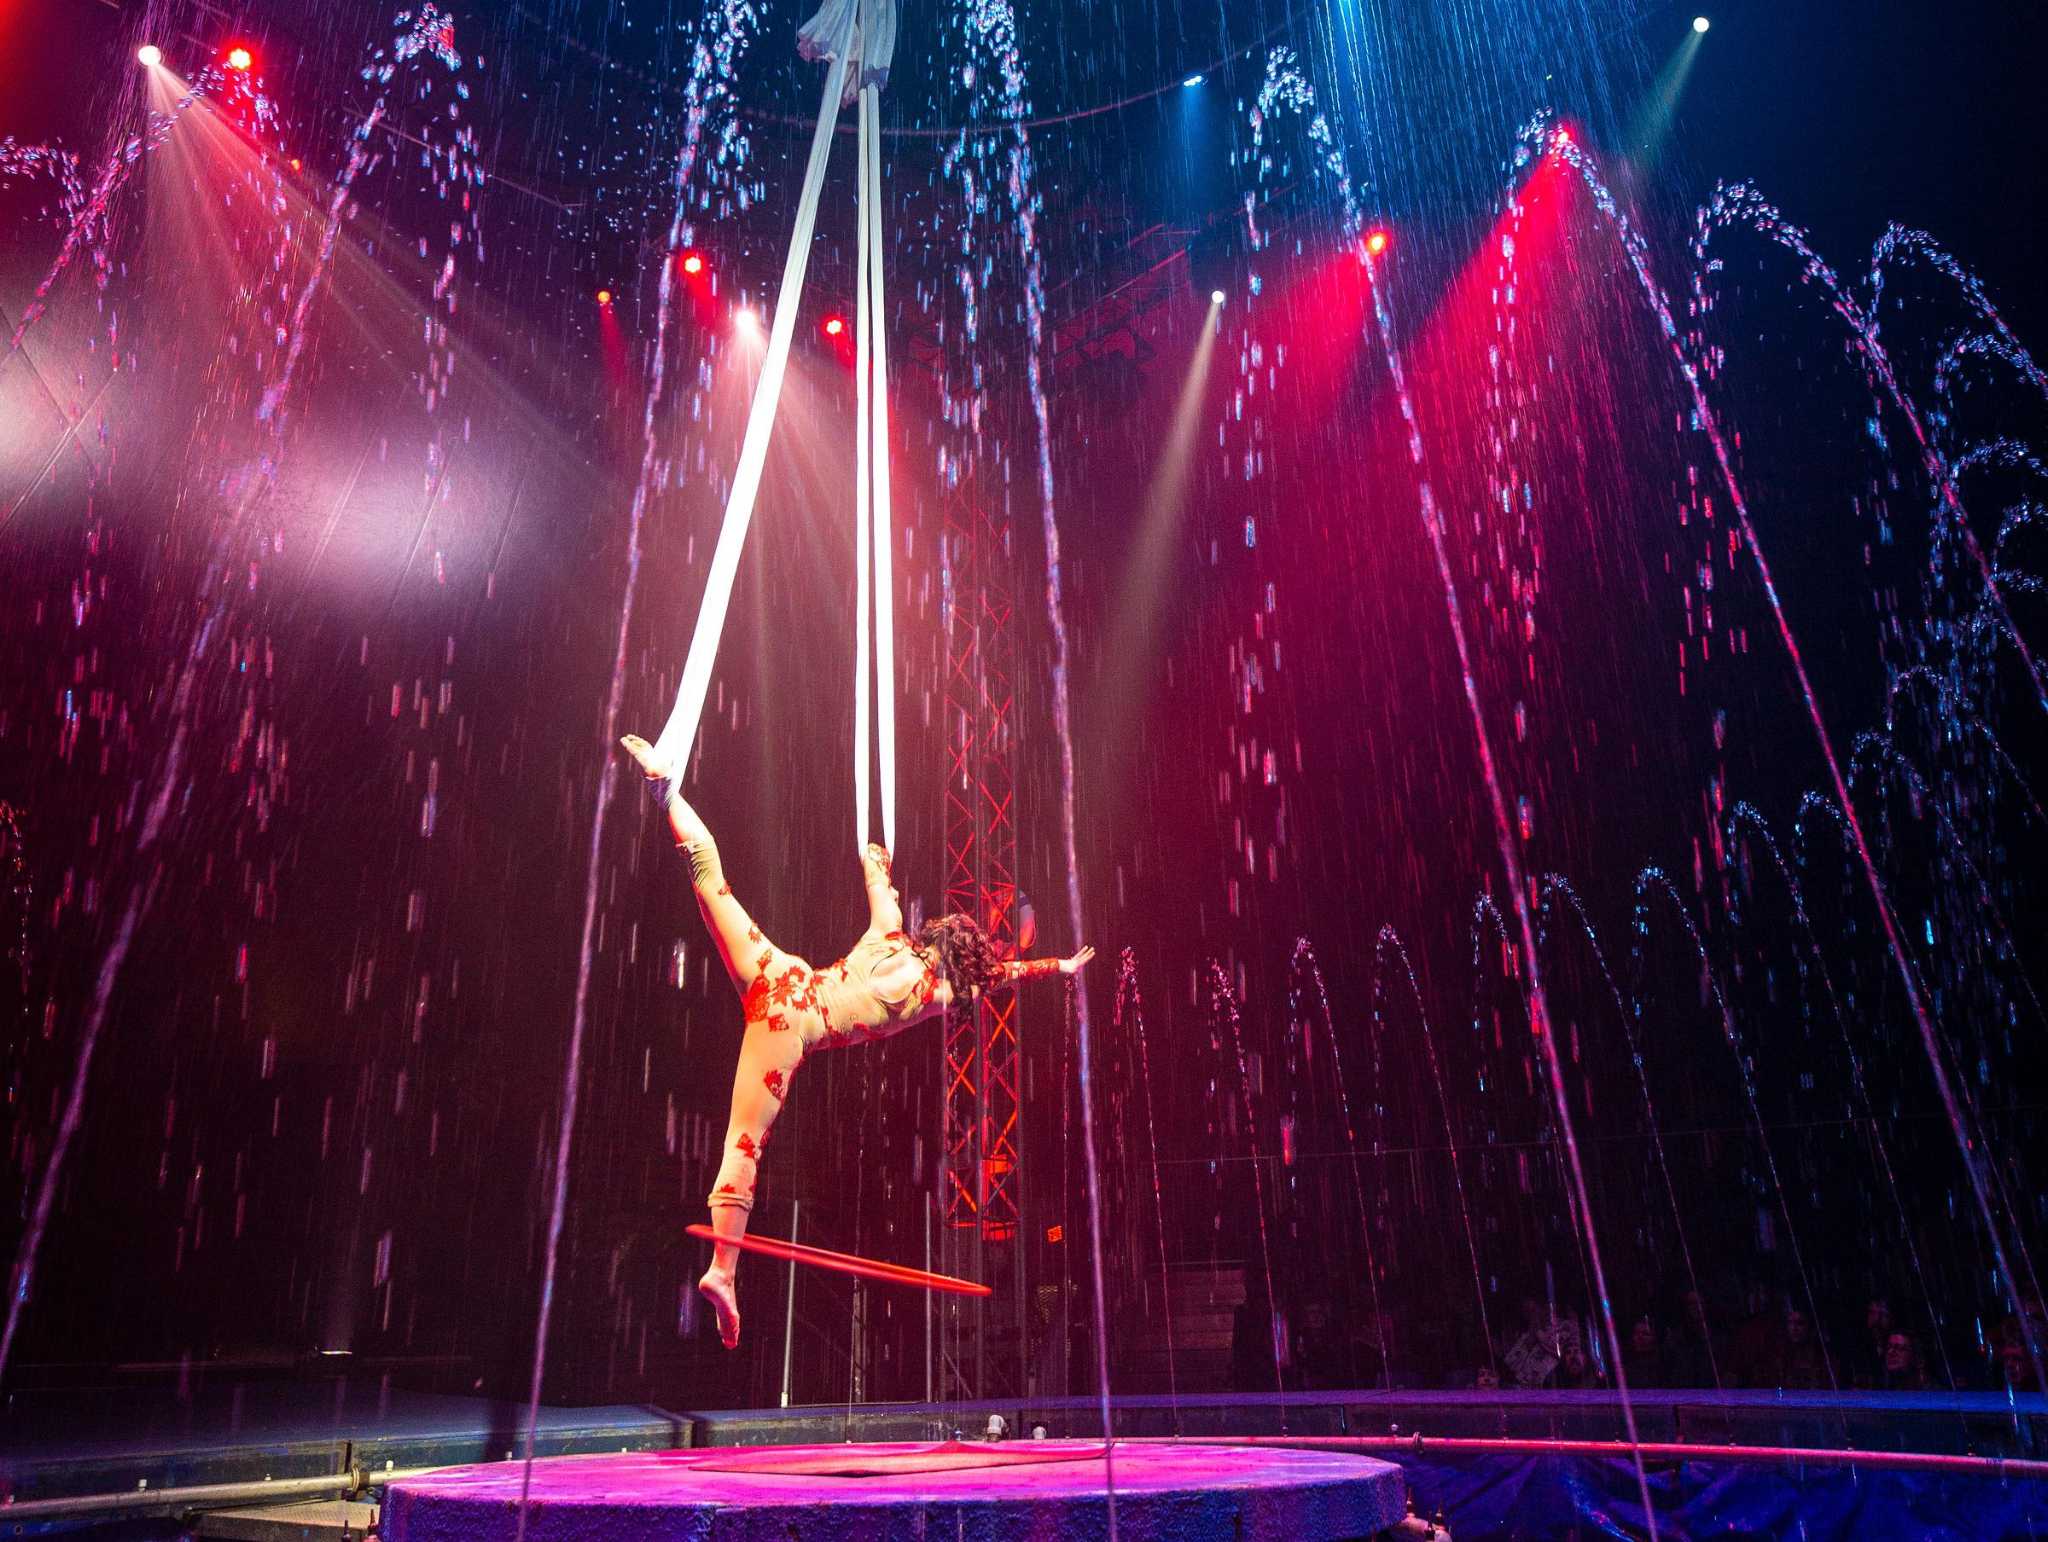 Italian water circus Cirque Italia returns to San Antonio